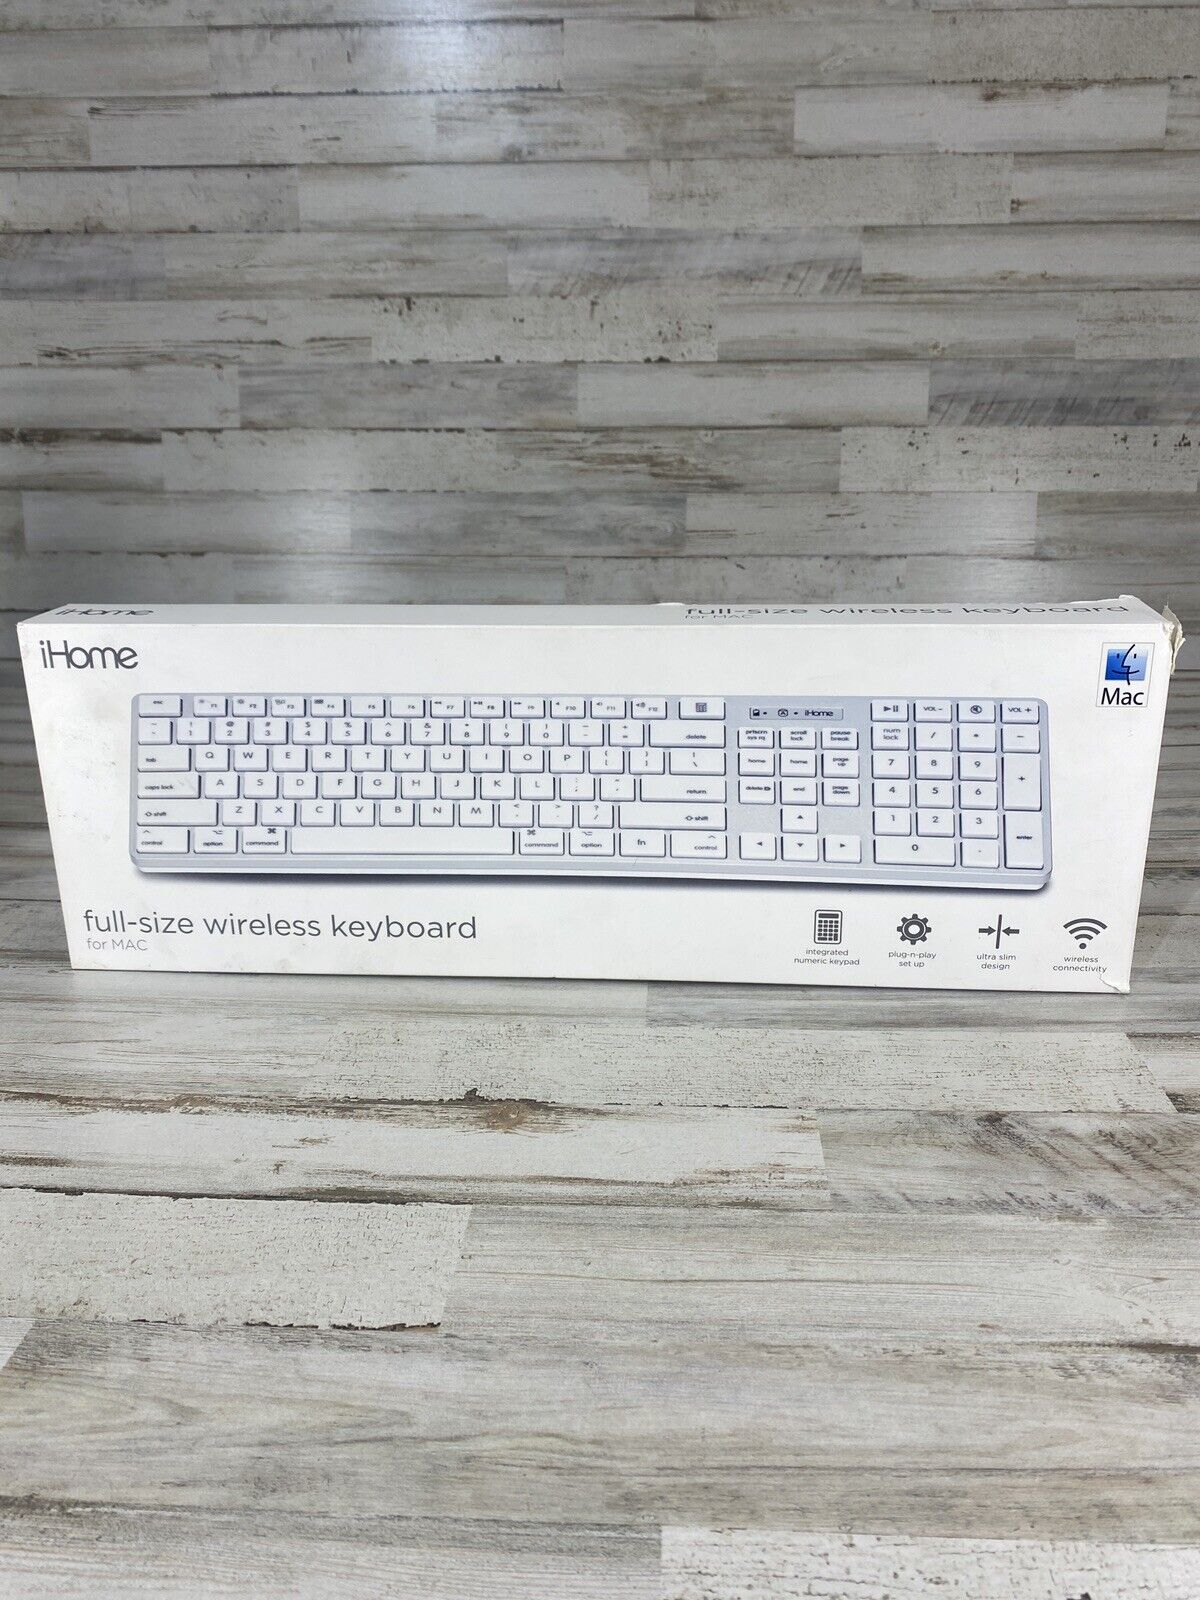 iHome IMAC full -size wireless keyboard with 2.4G Nano Receiver - Silver